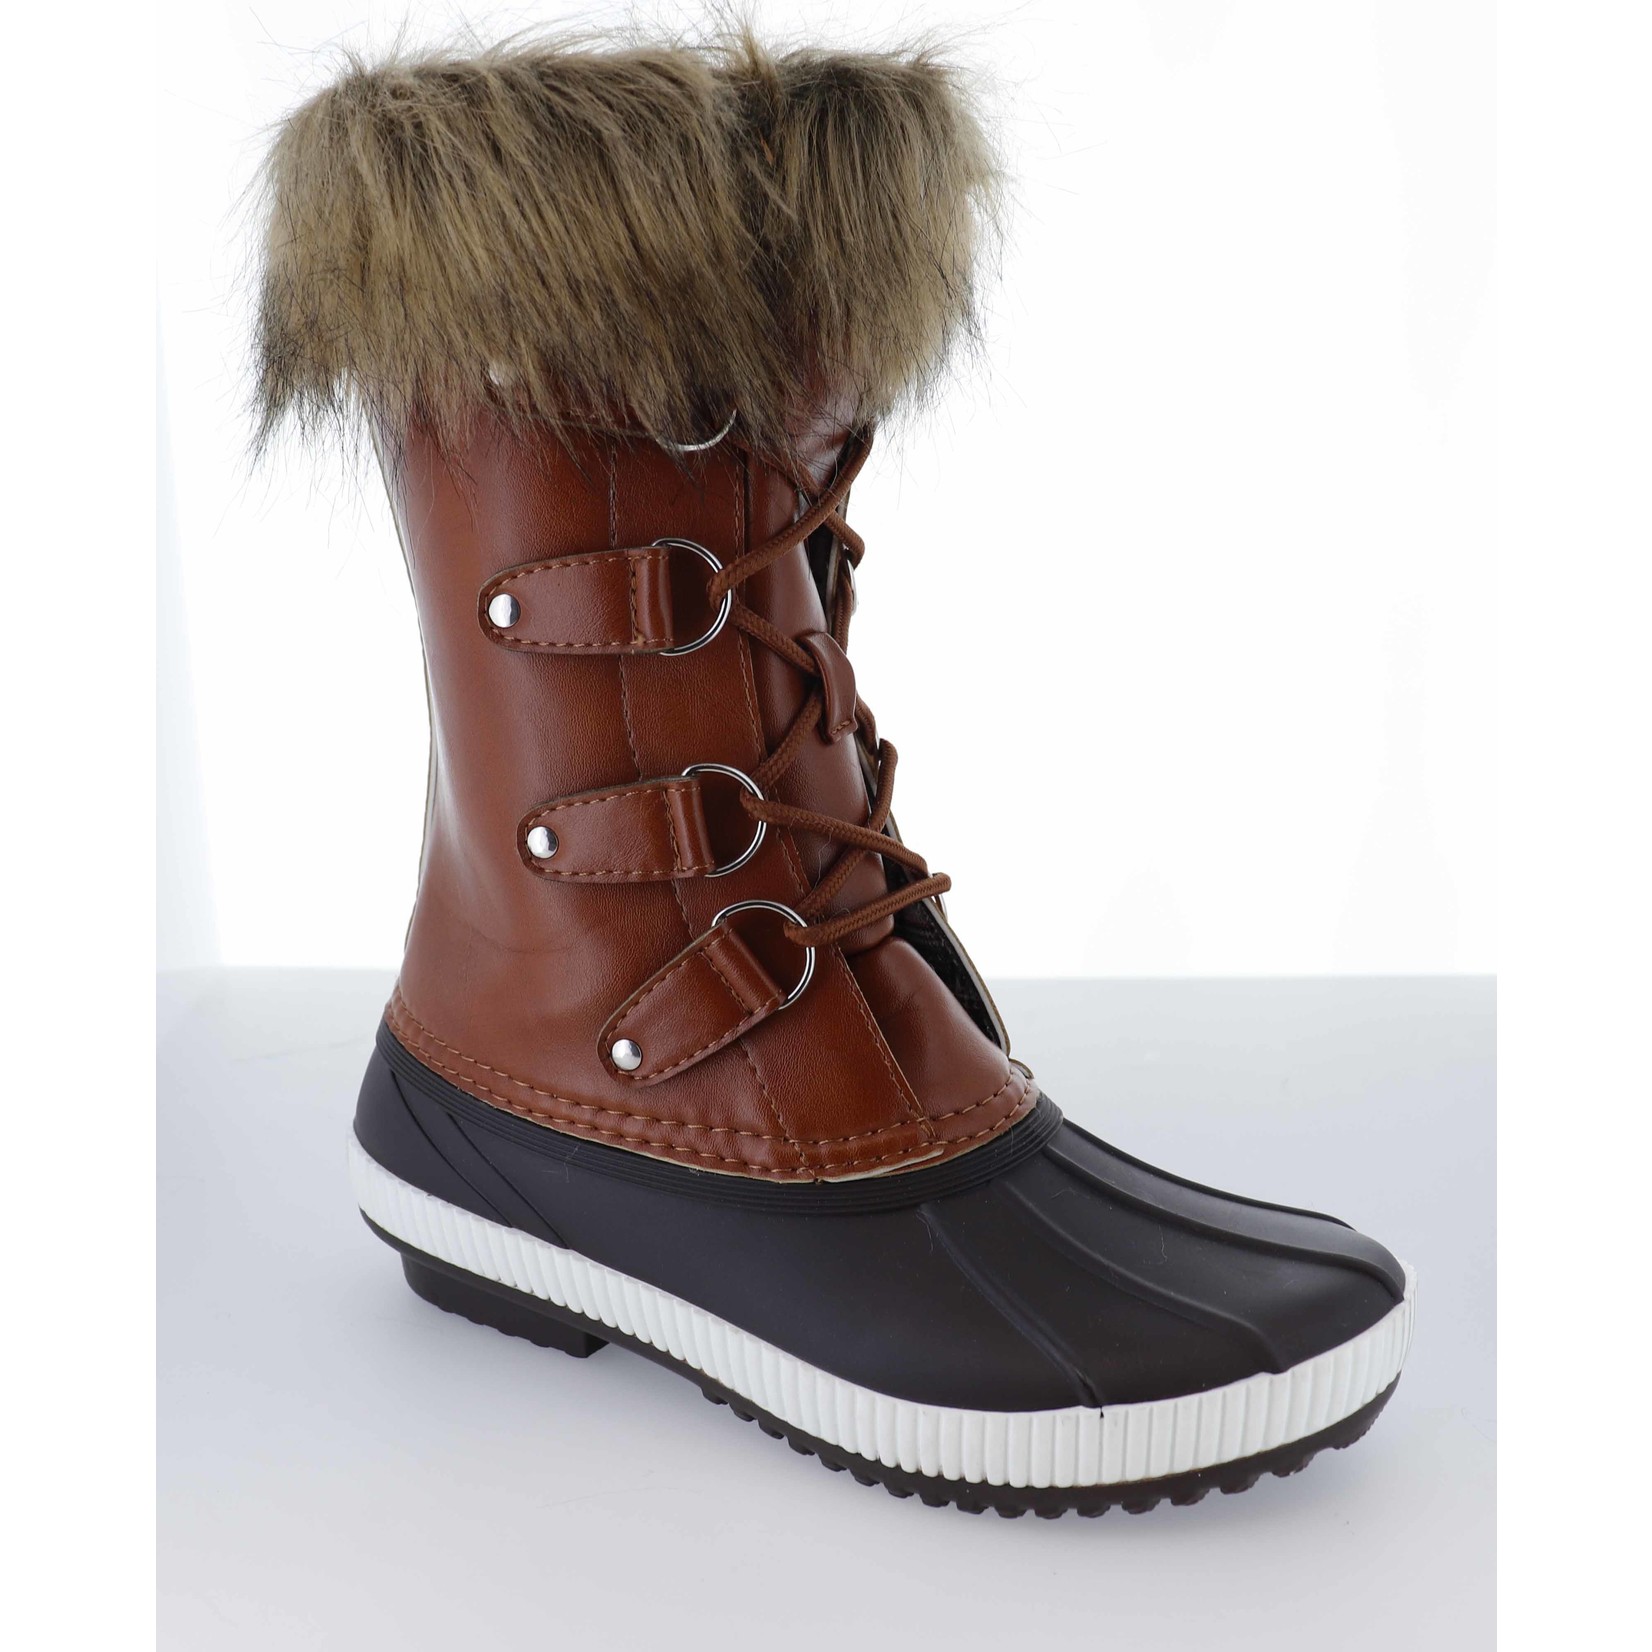 Winter Snow Boots Chestnut